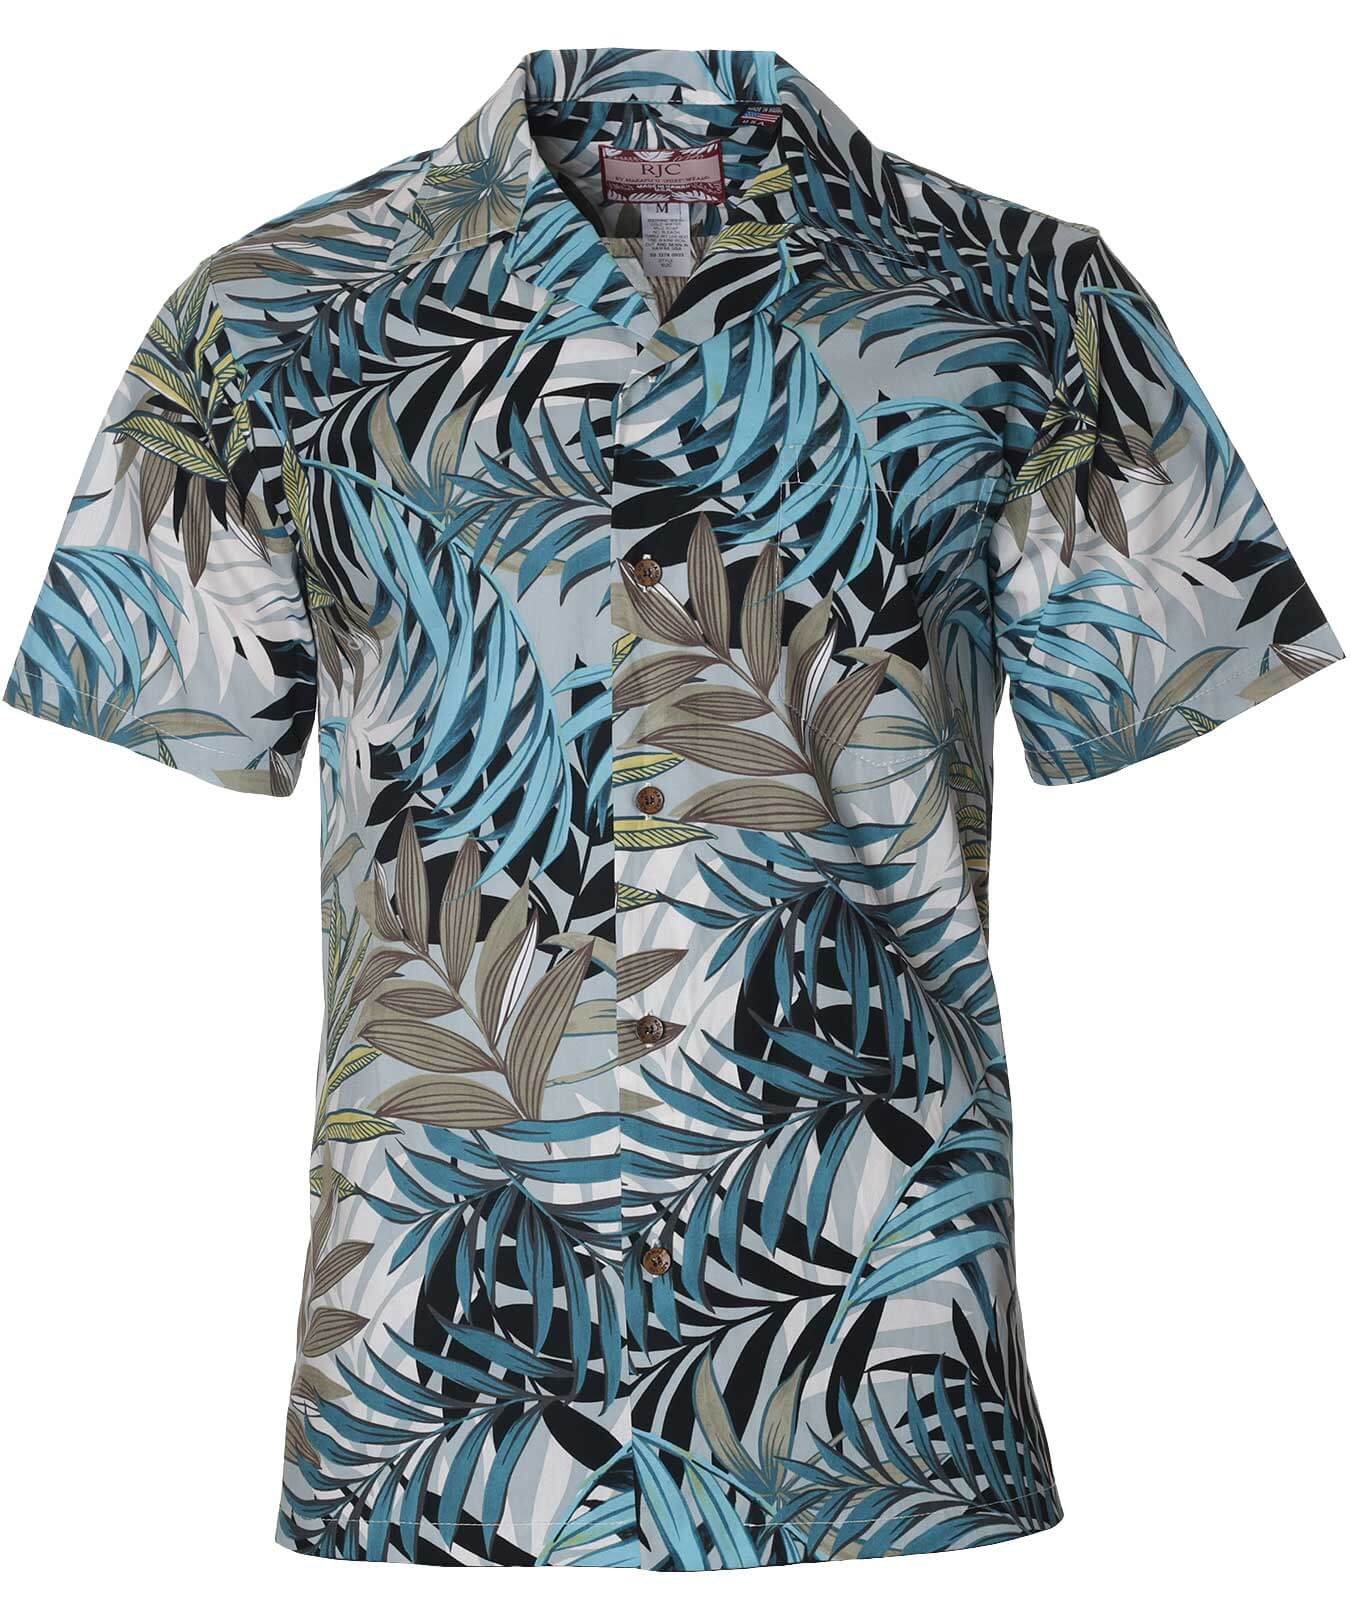 Hauoli Men's Cotton Aloha Shirt Teal